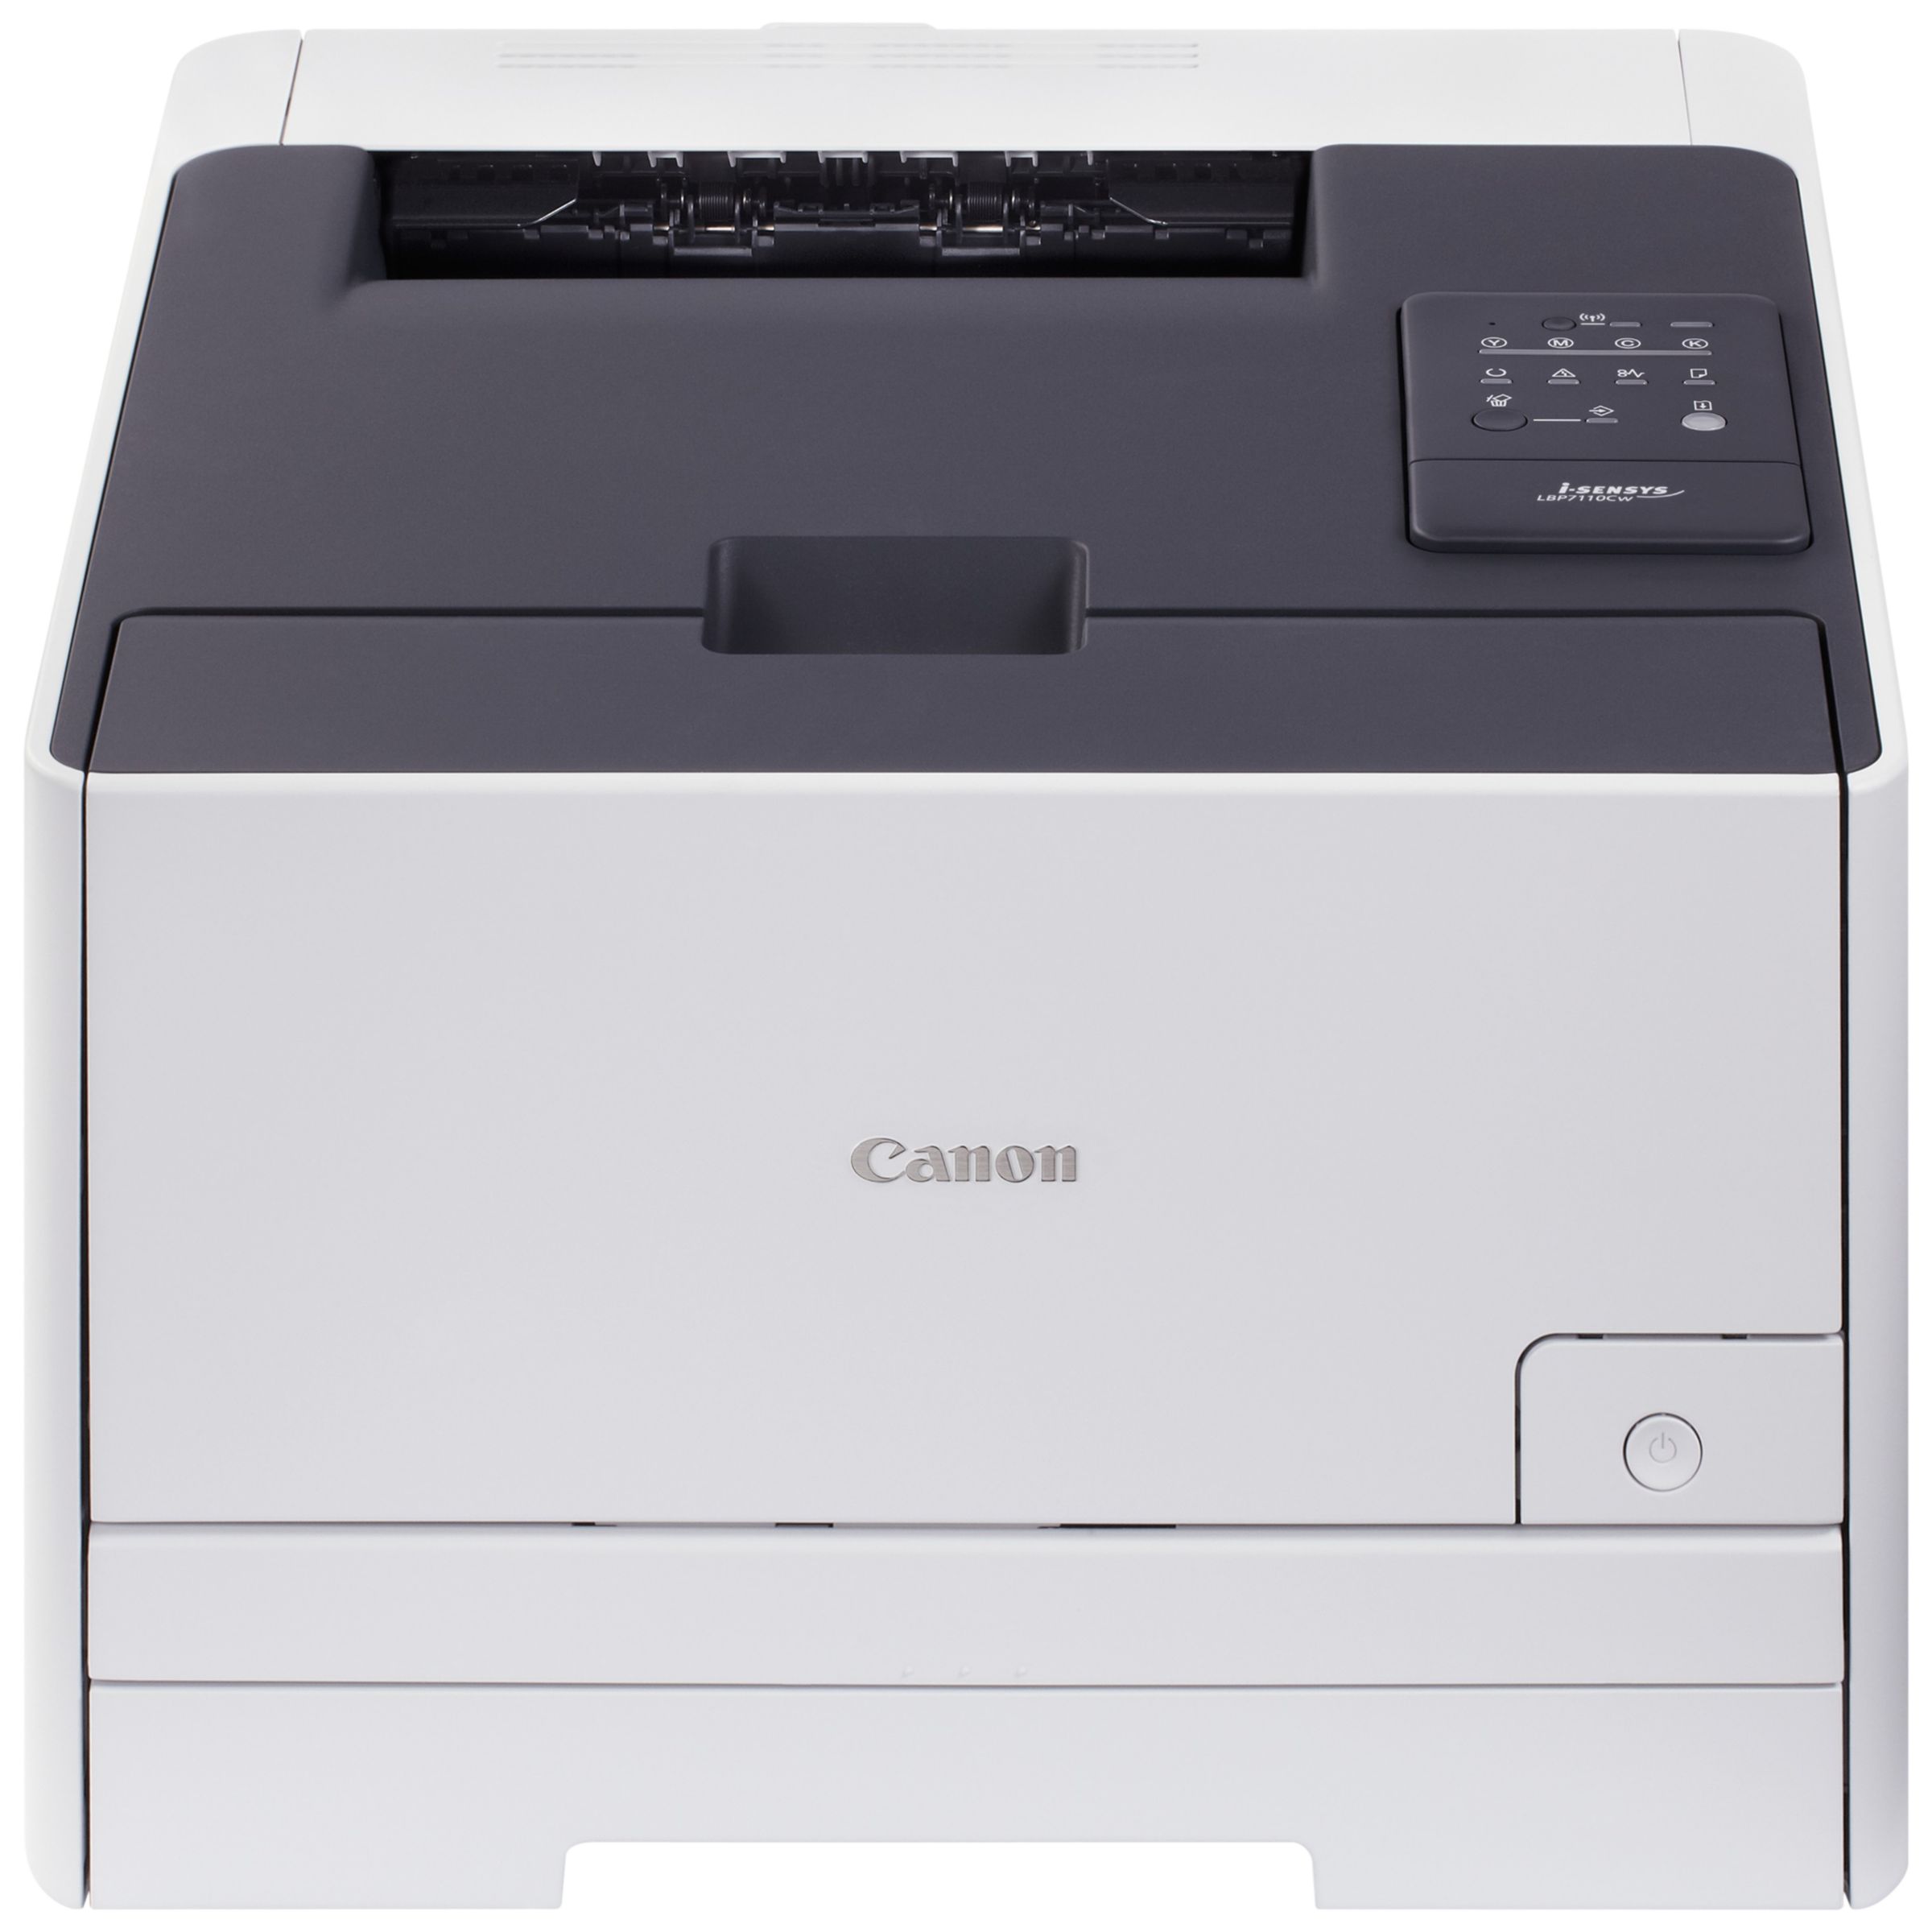 Canon i-SENSYS LBP7110CW Wireless Laser Printer